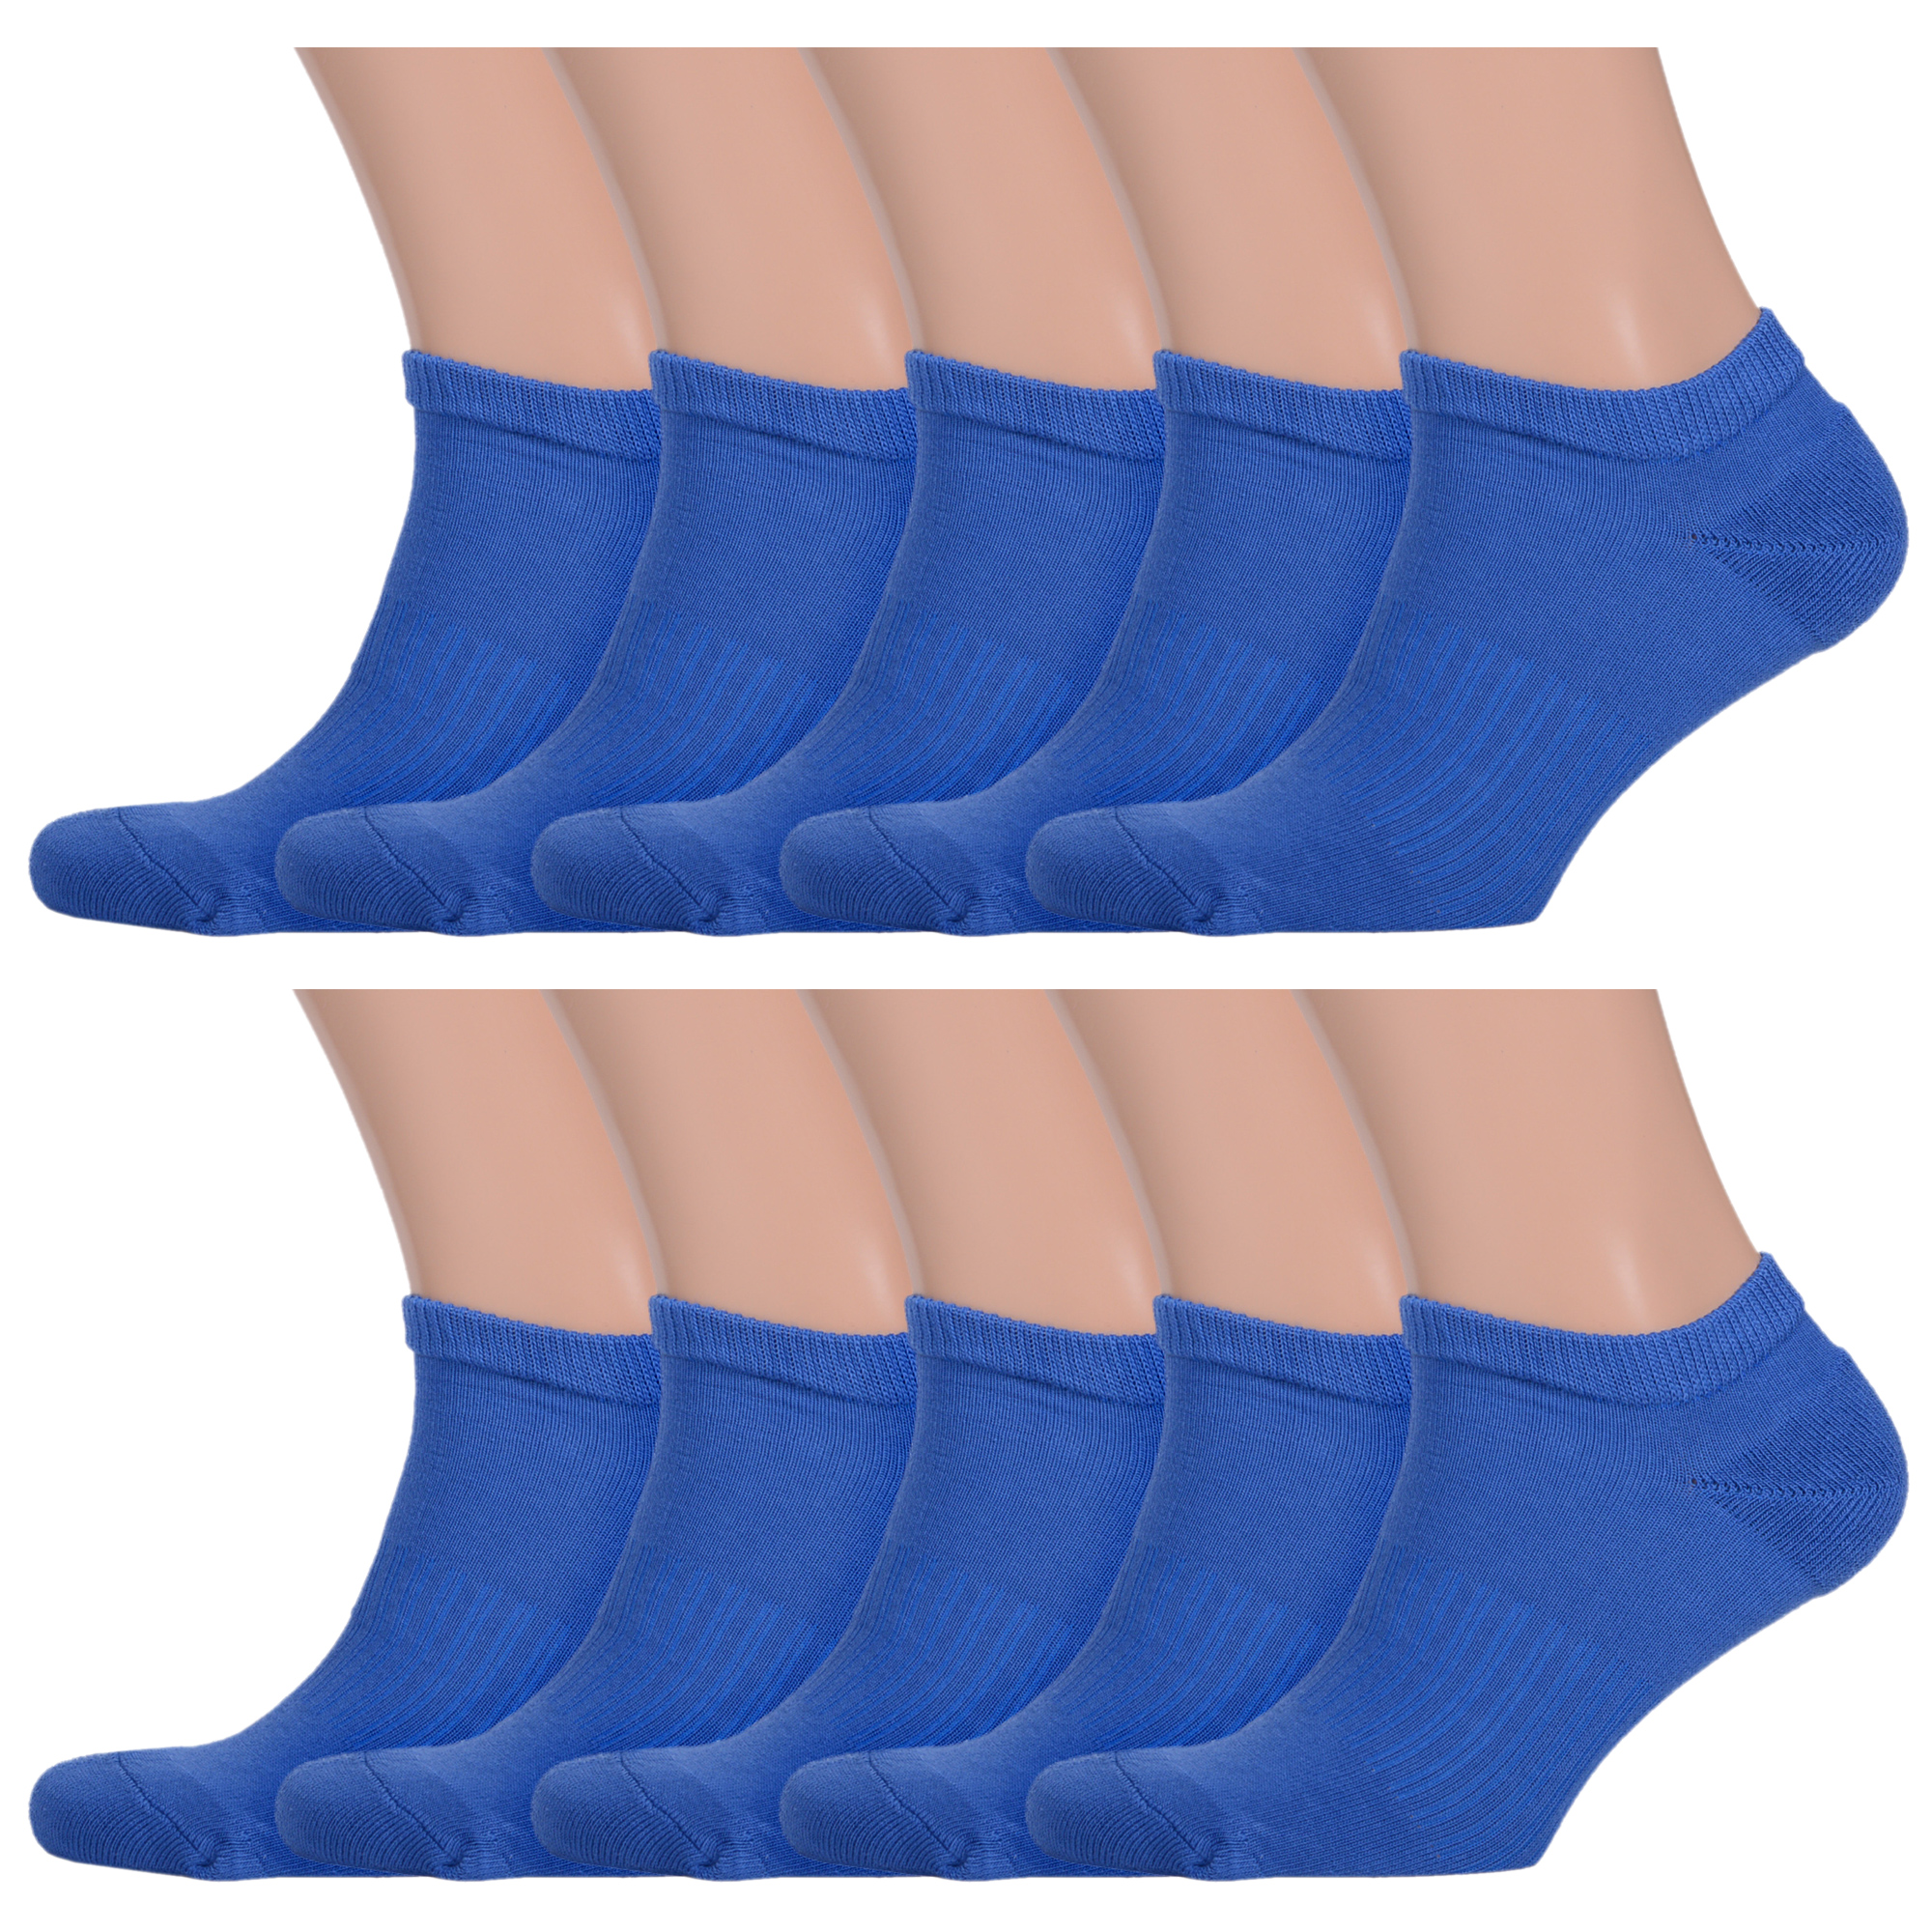 Комплект носков мужских Palama 10-МКС-03 синих 25